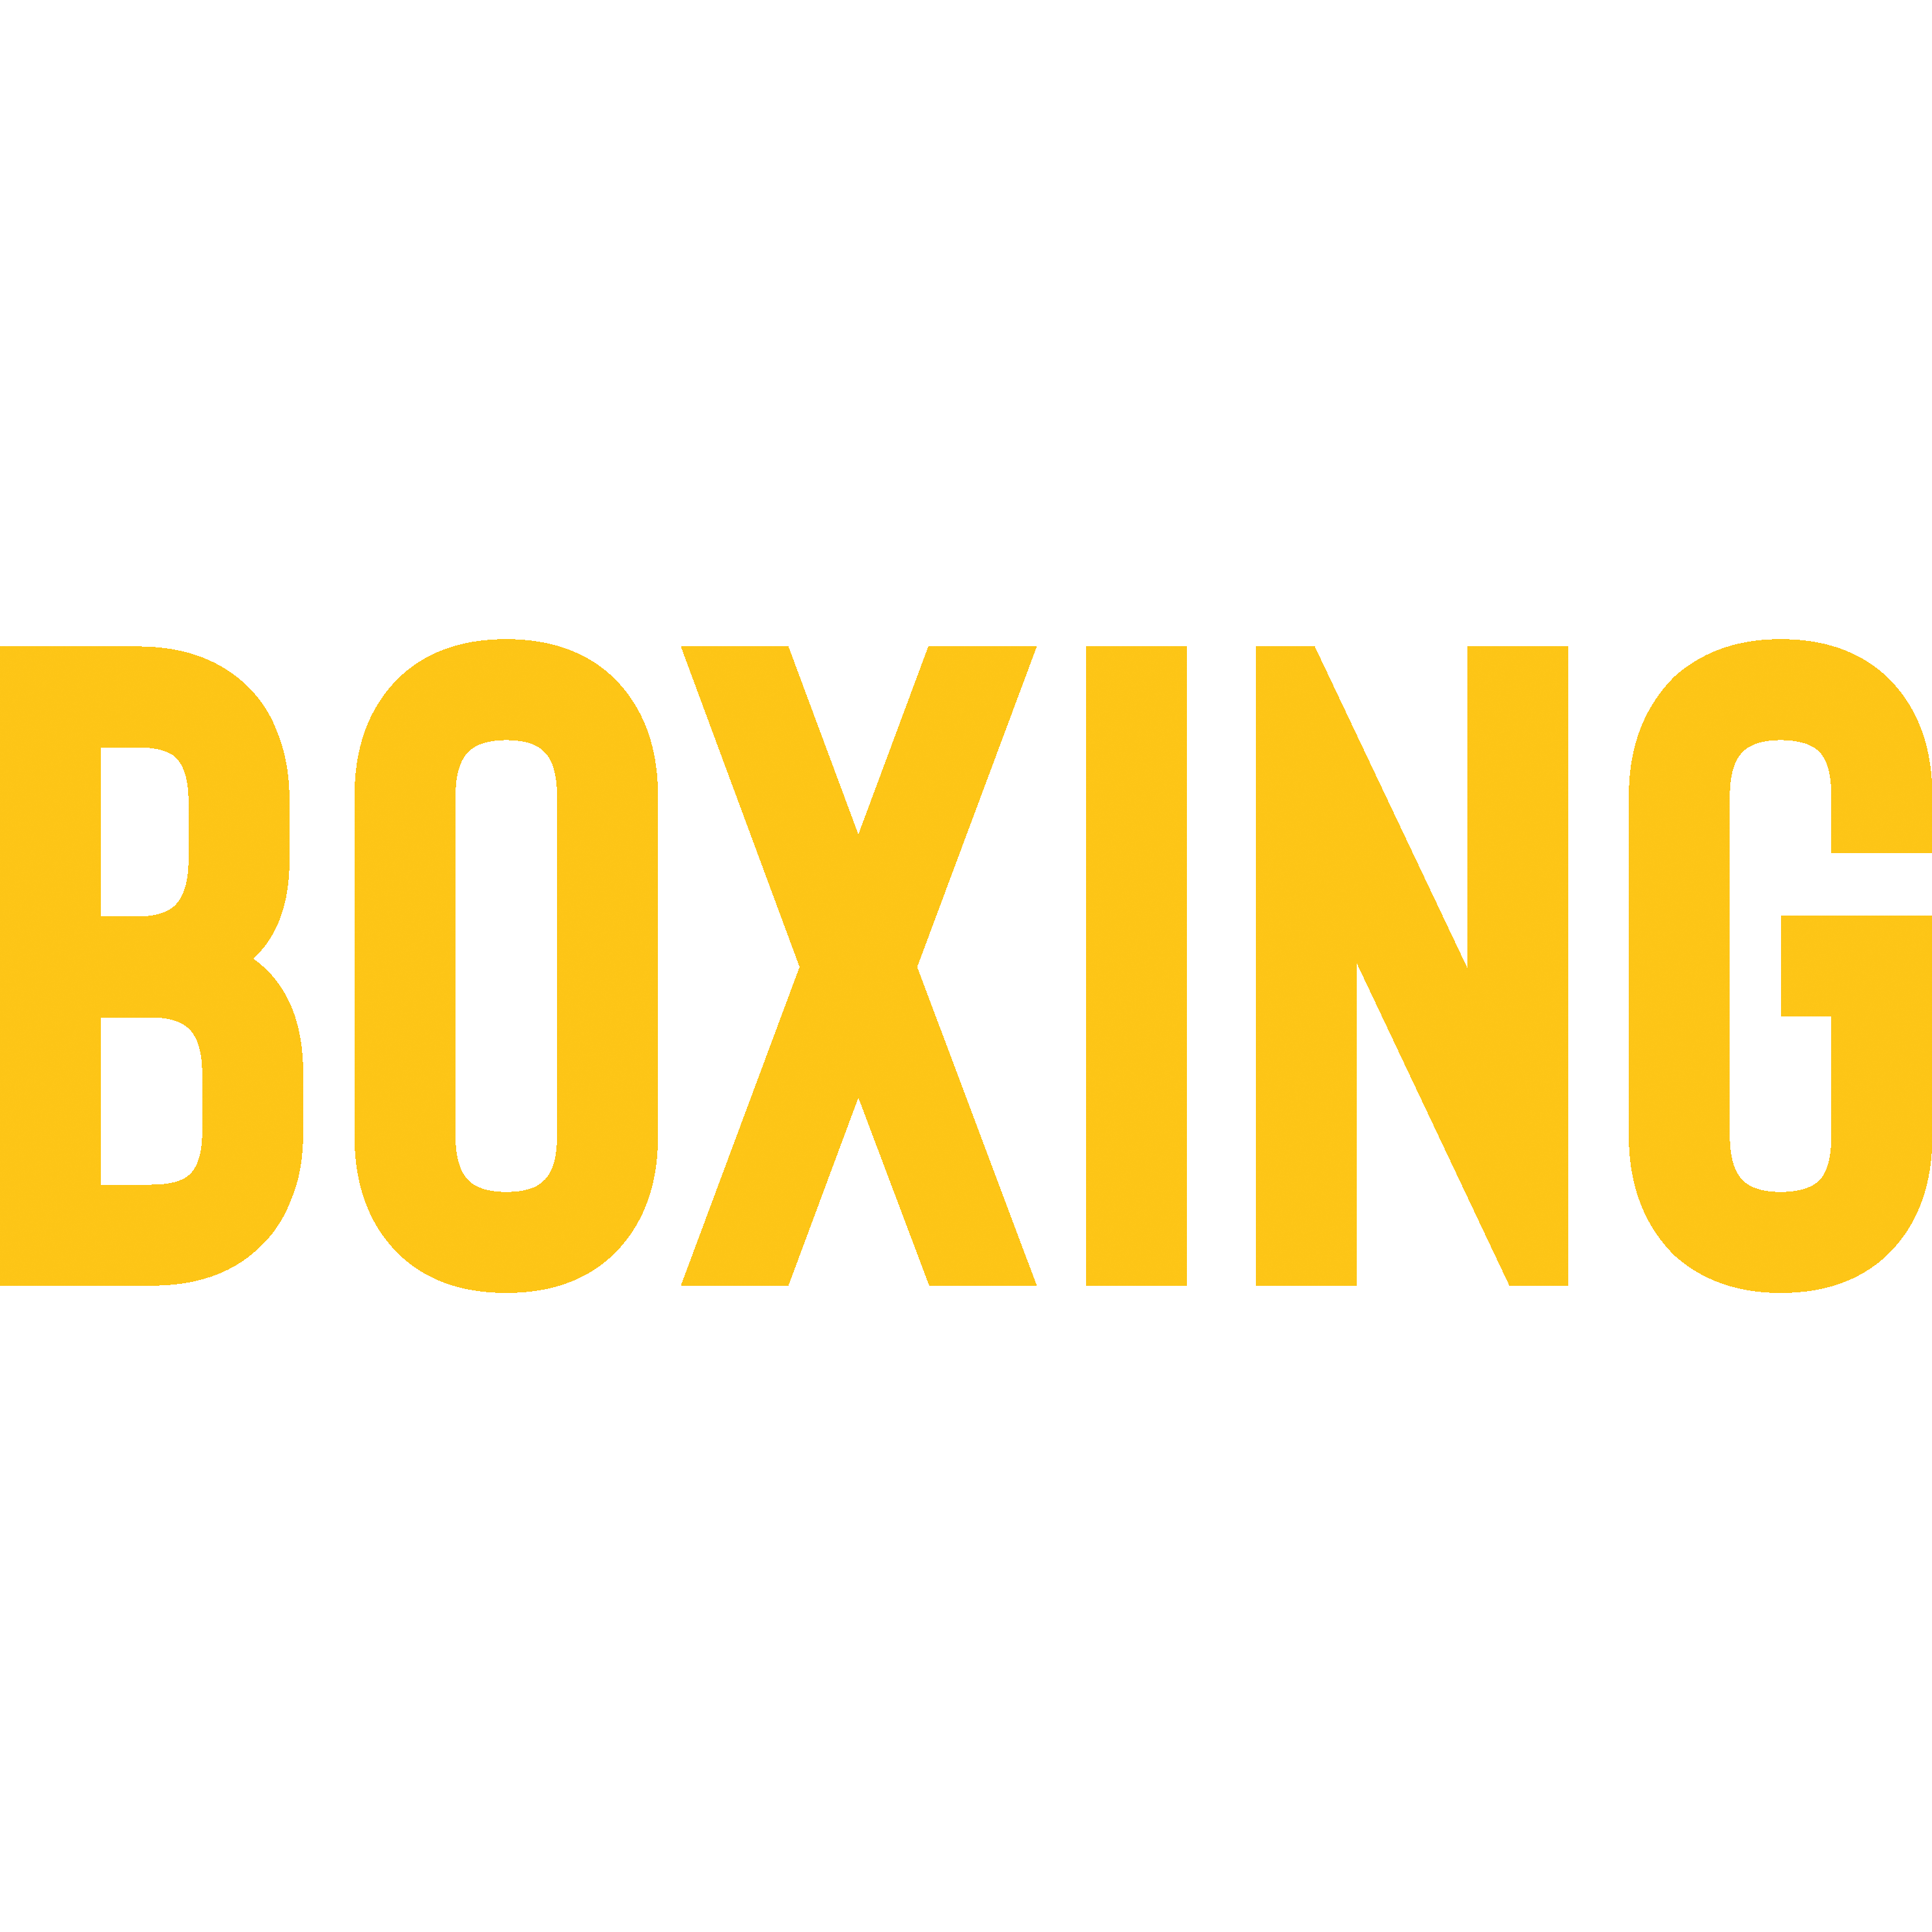 Budapest Boxing Club